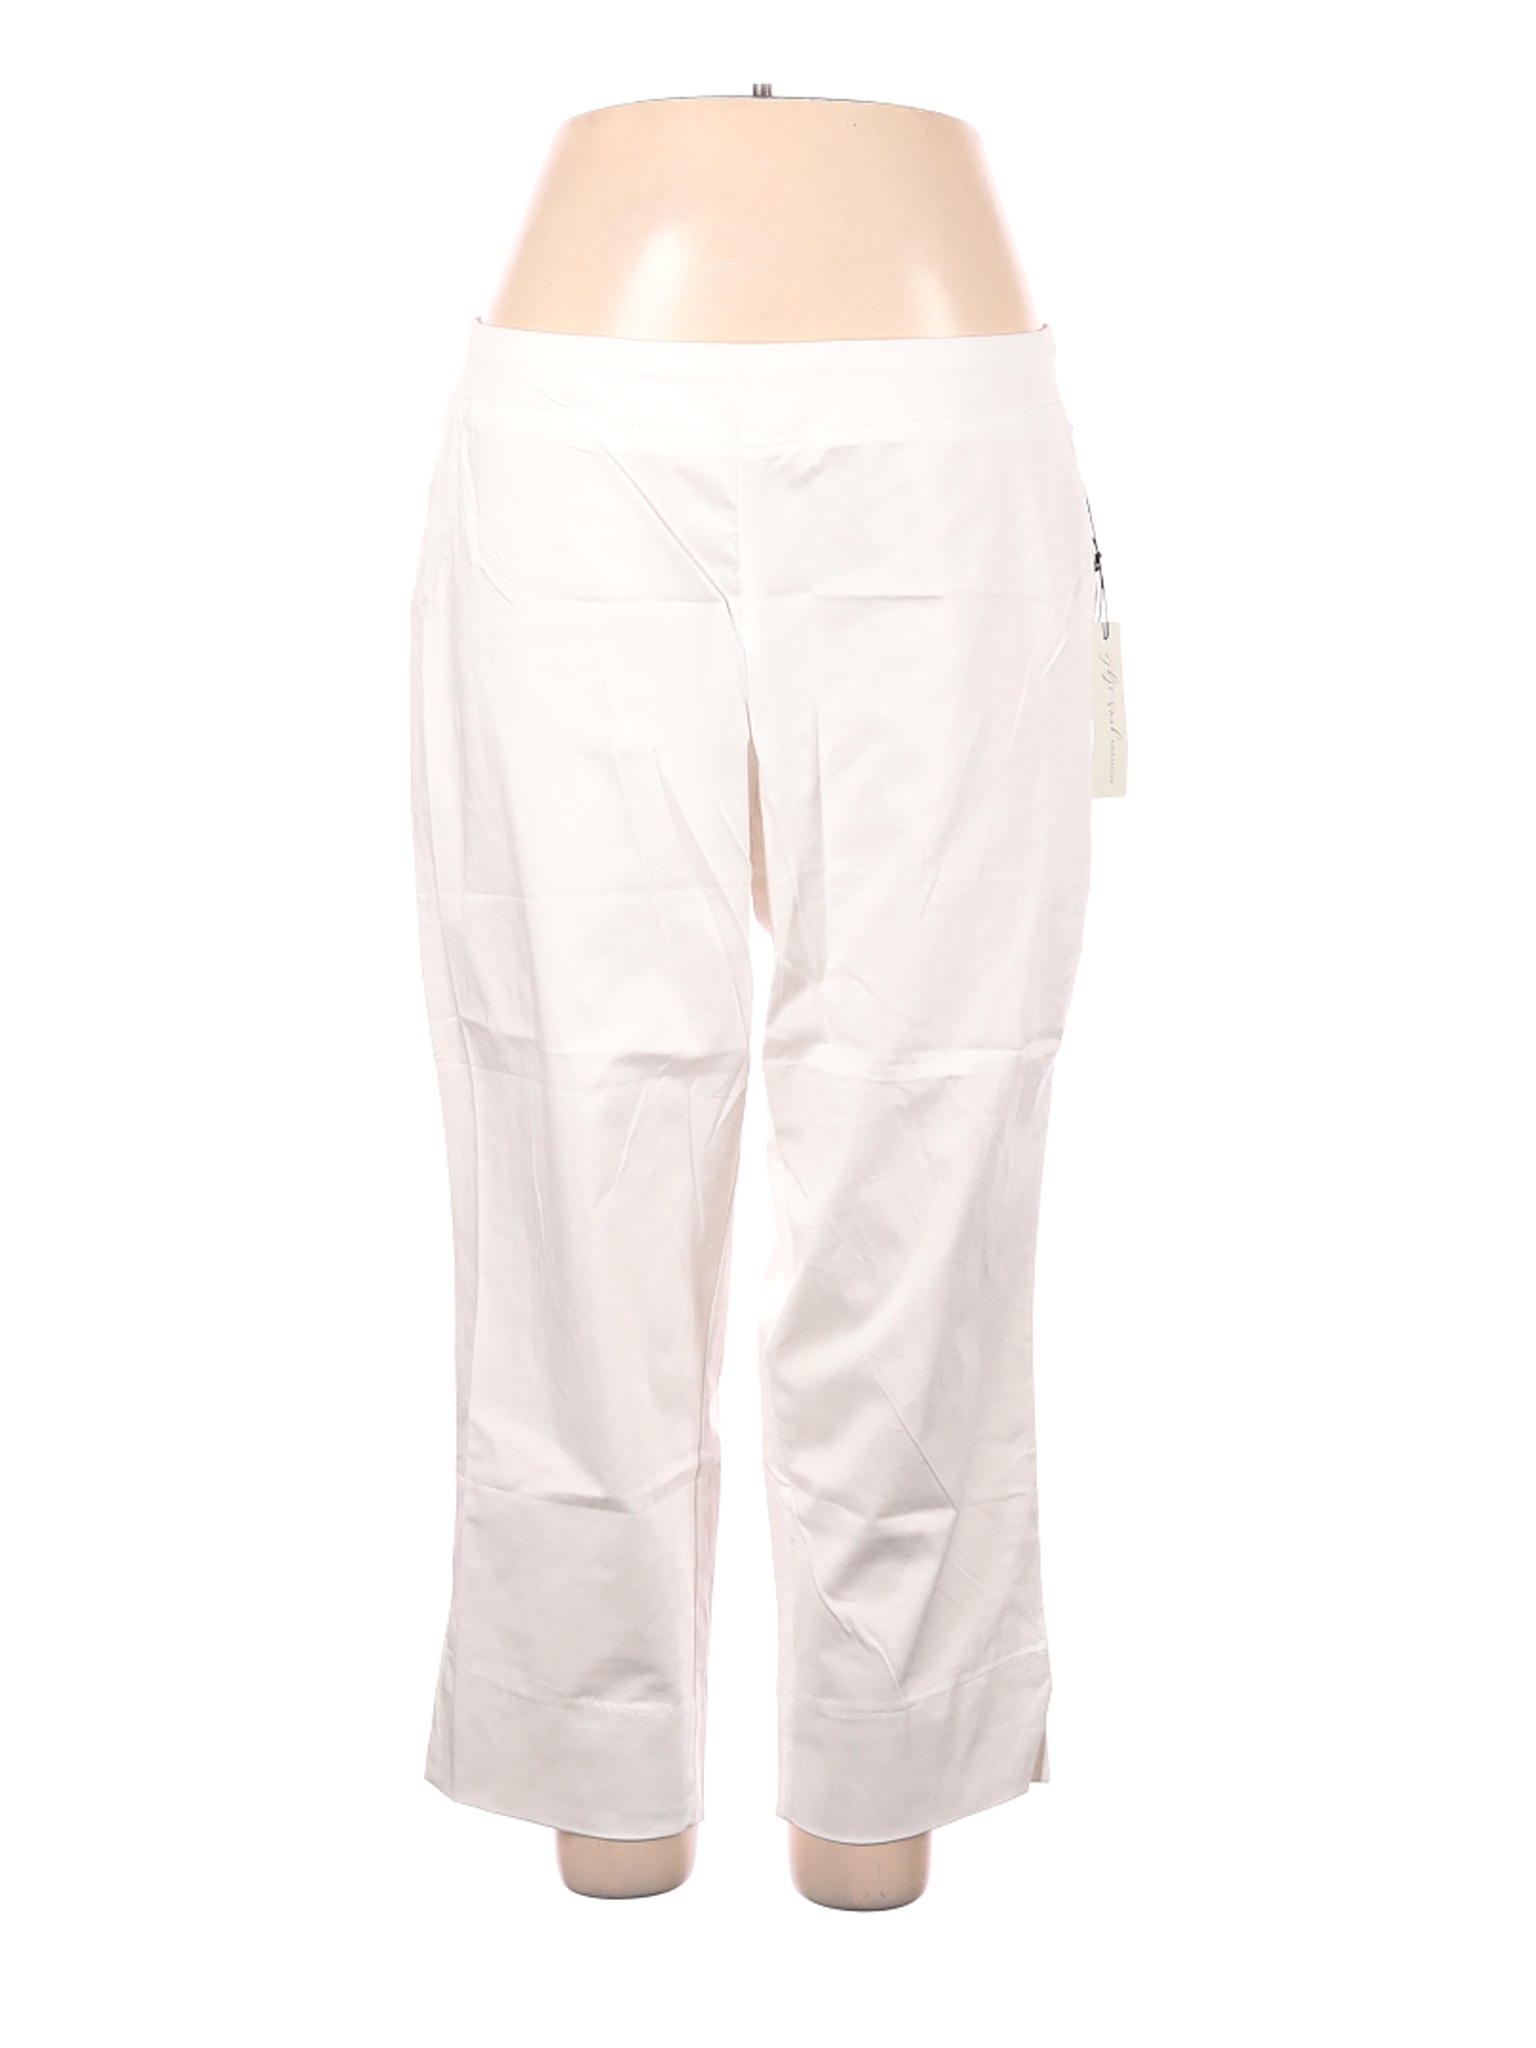 NWT Rachel Zoe Women White Casual Pants 18 Plus | eBay